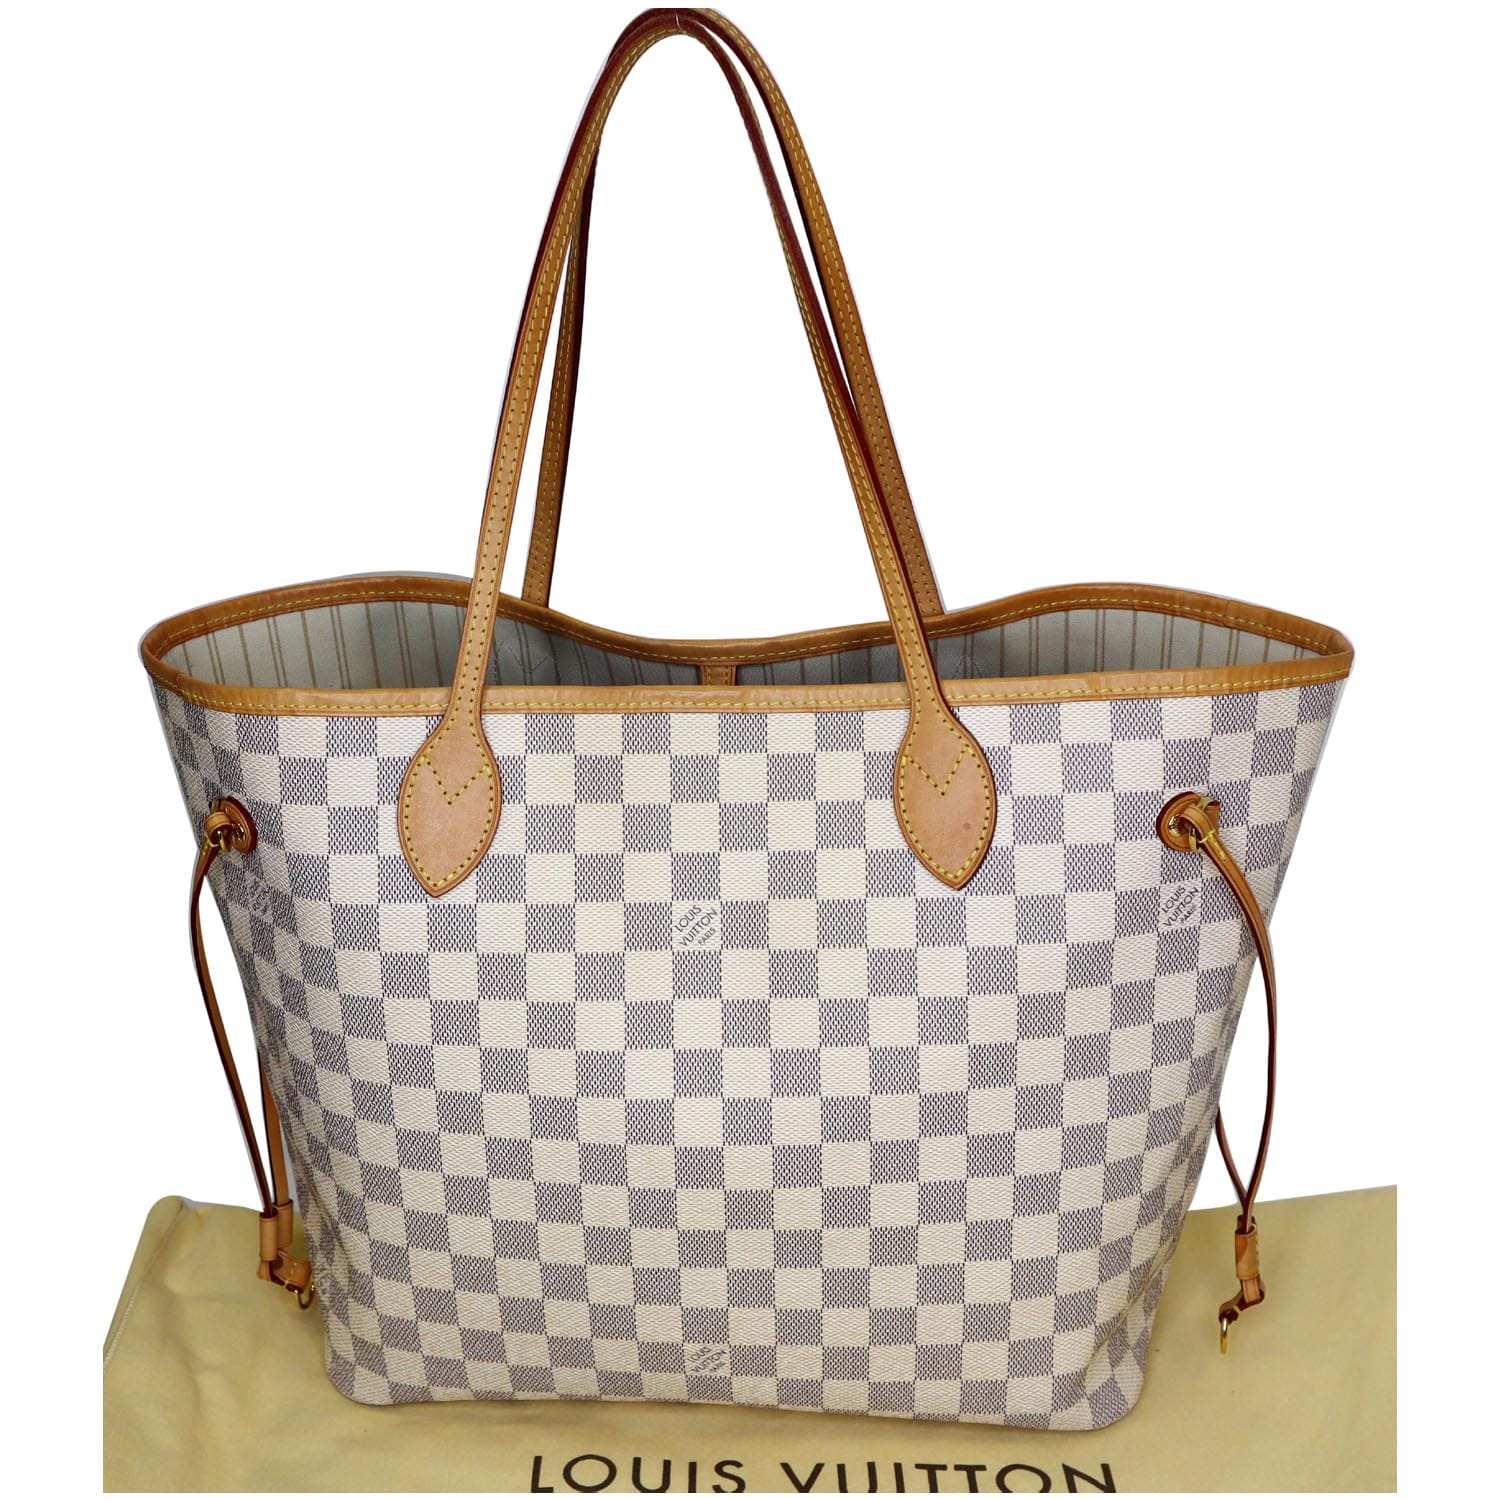 White Louis Vuitton Damier Azur Neverfull MM Tote Bag